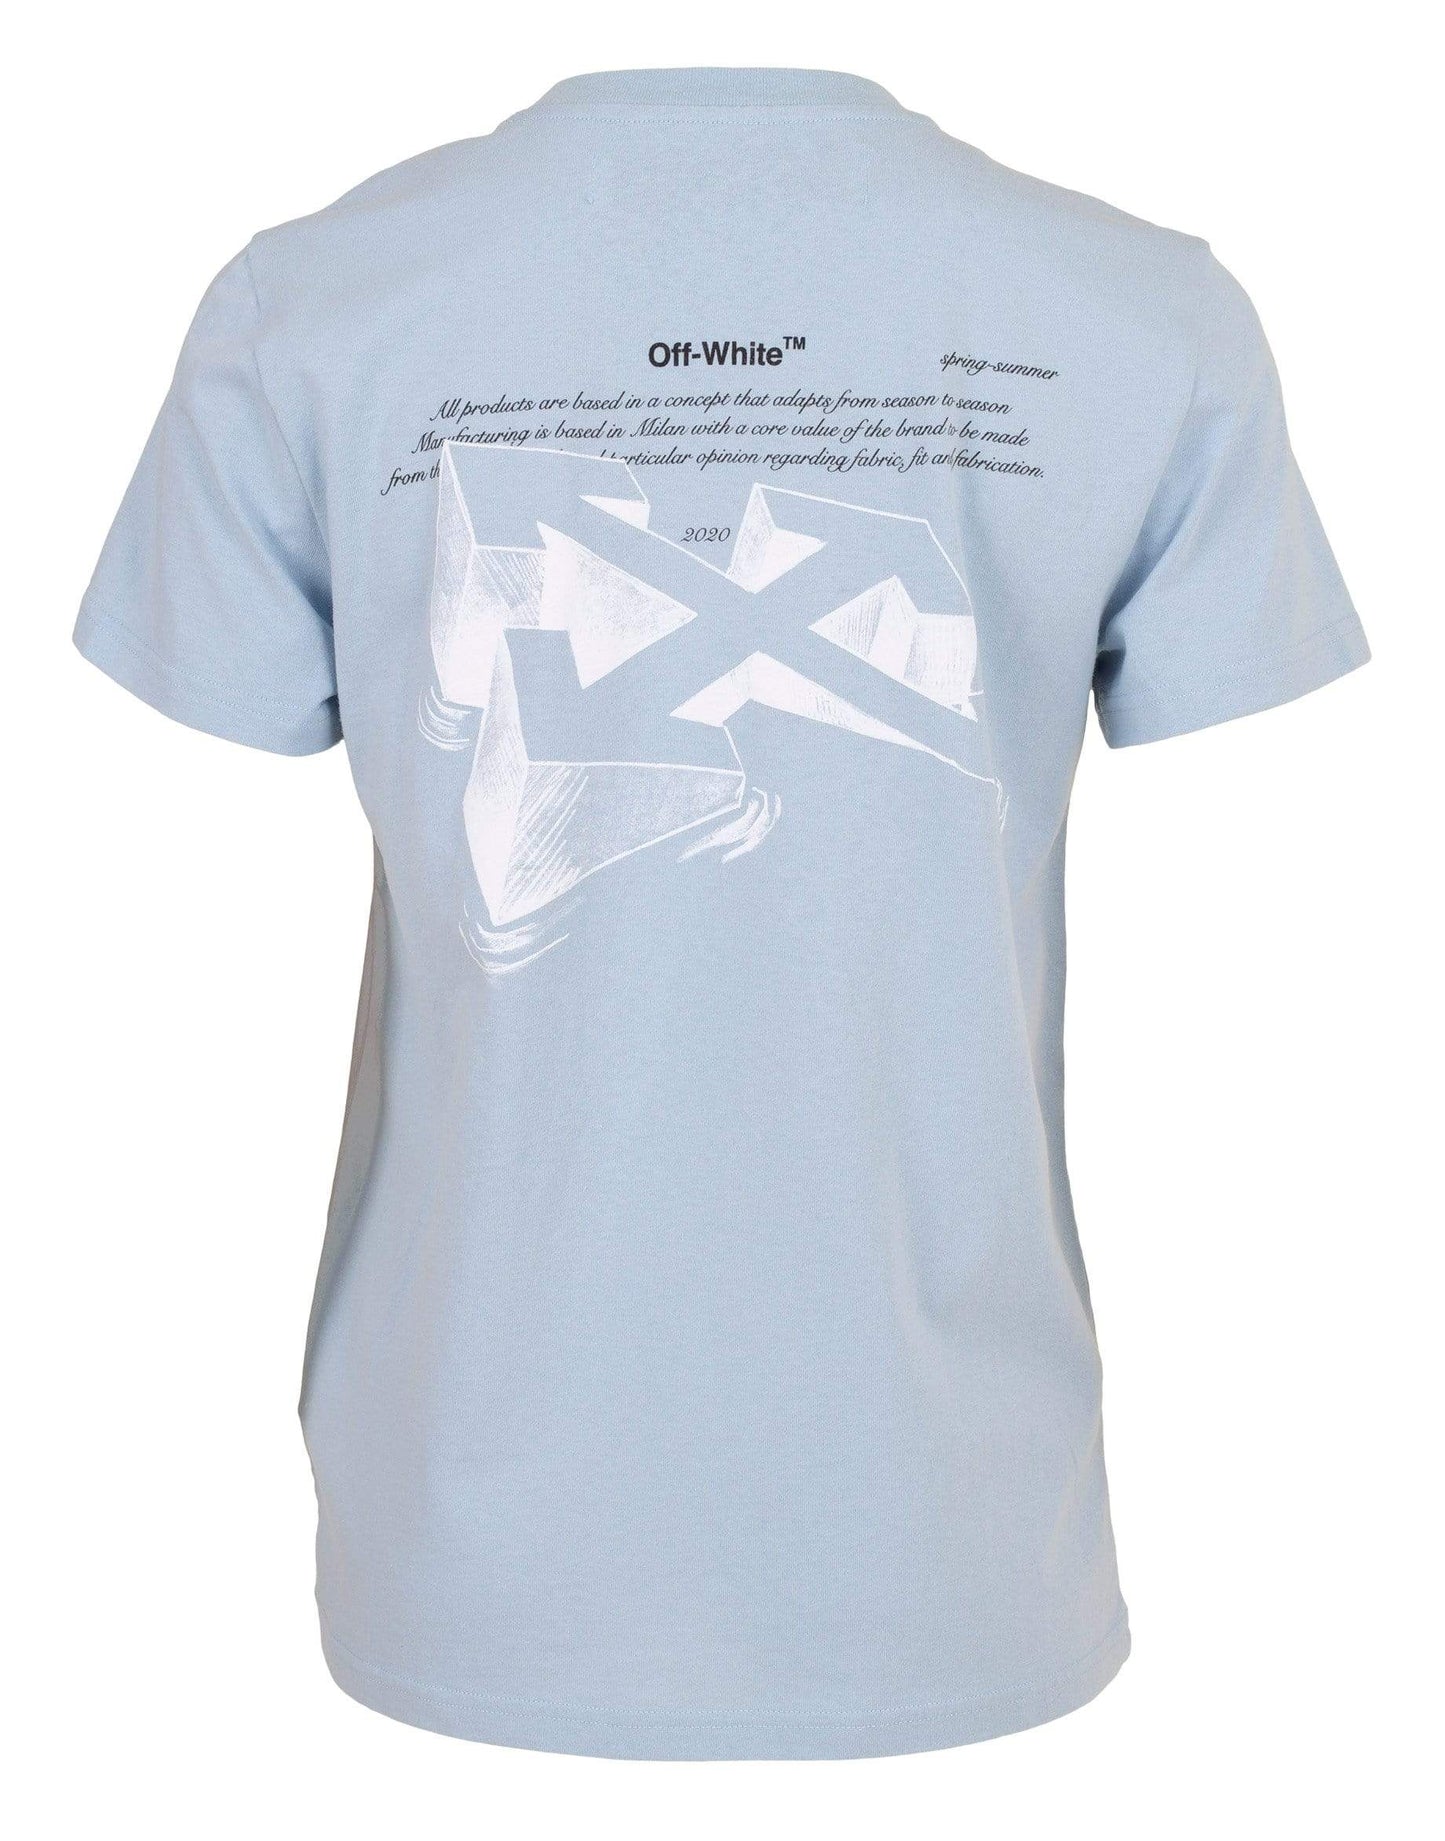 OFF-WHITE-Arrows Sketch T-Shirt-